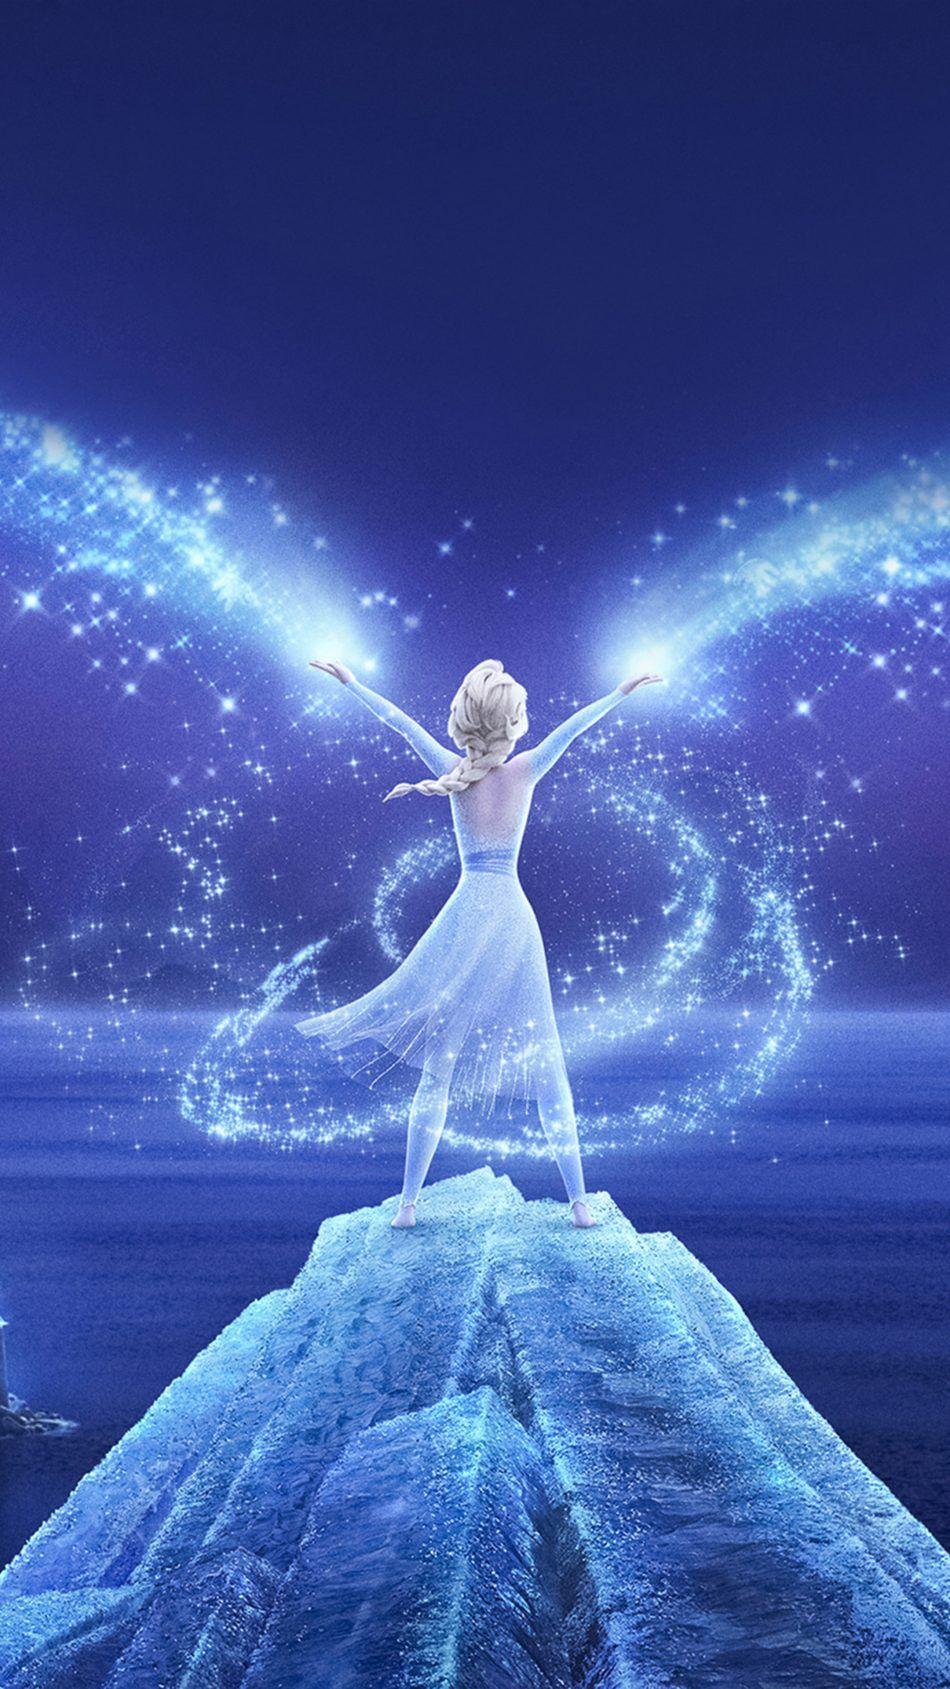 Queen Elsa Frozen 2 2019. Disney princess frozen, Frozen picture